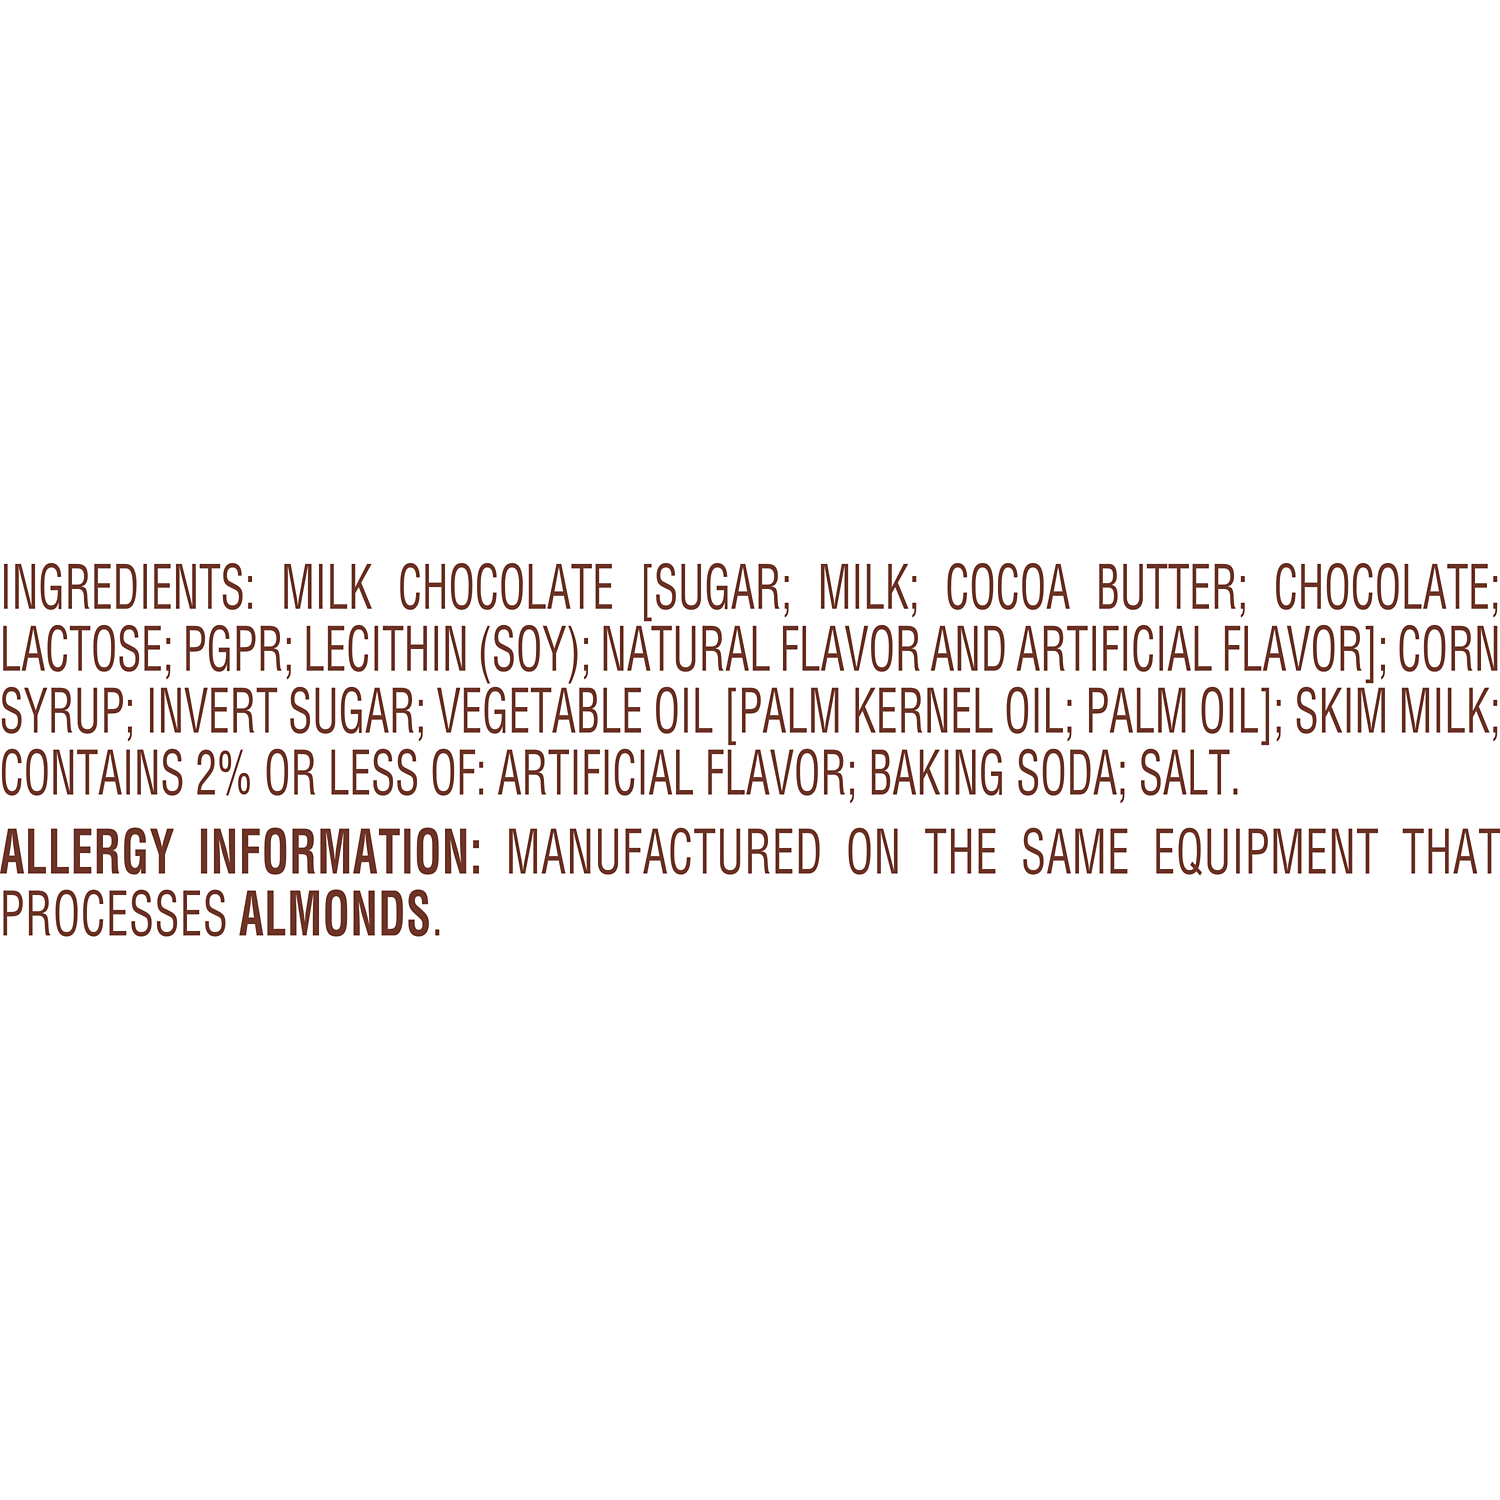 CADBURY CARAMELLO Caramel and Milk Chocolate King Size Candy Bar, 2.7 oz - Ingredients